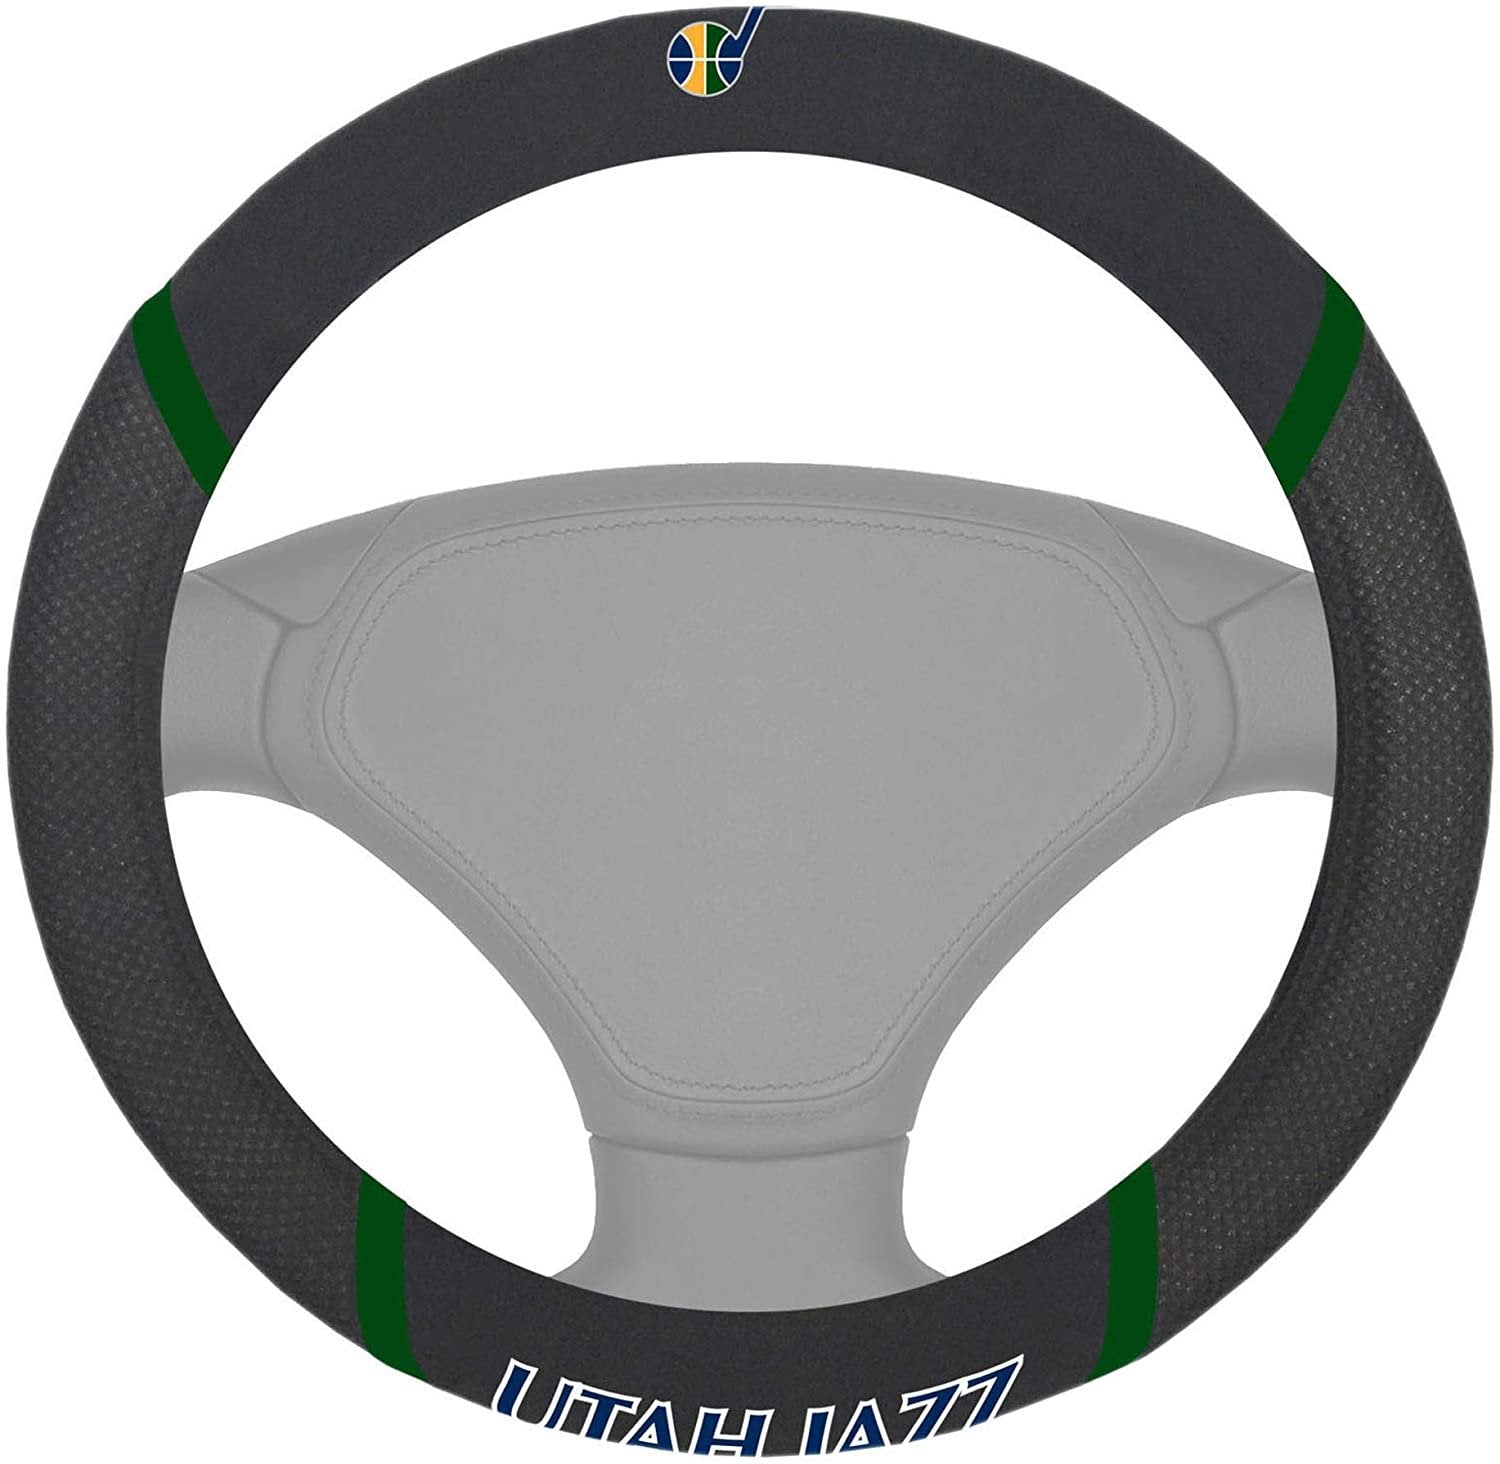 Utah Jazz Steering Wheel Cover Premium Embroidered Black 15 Inch